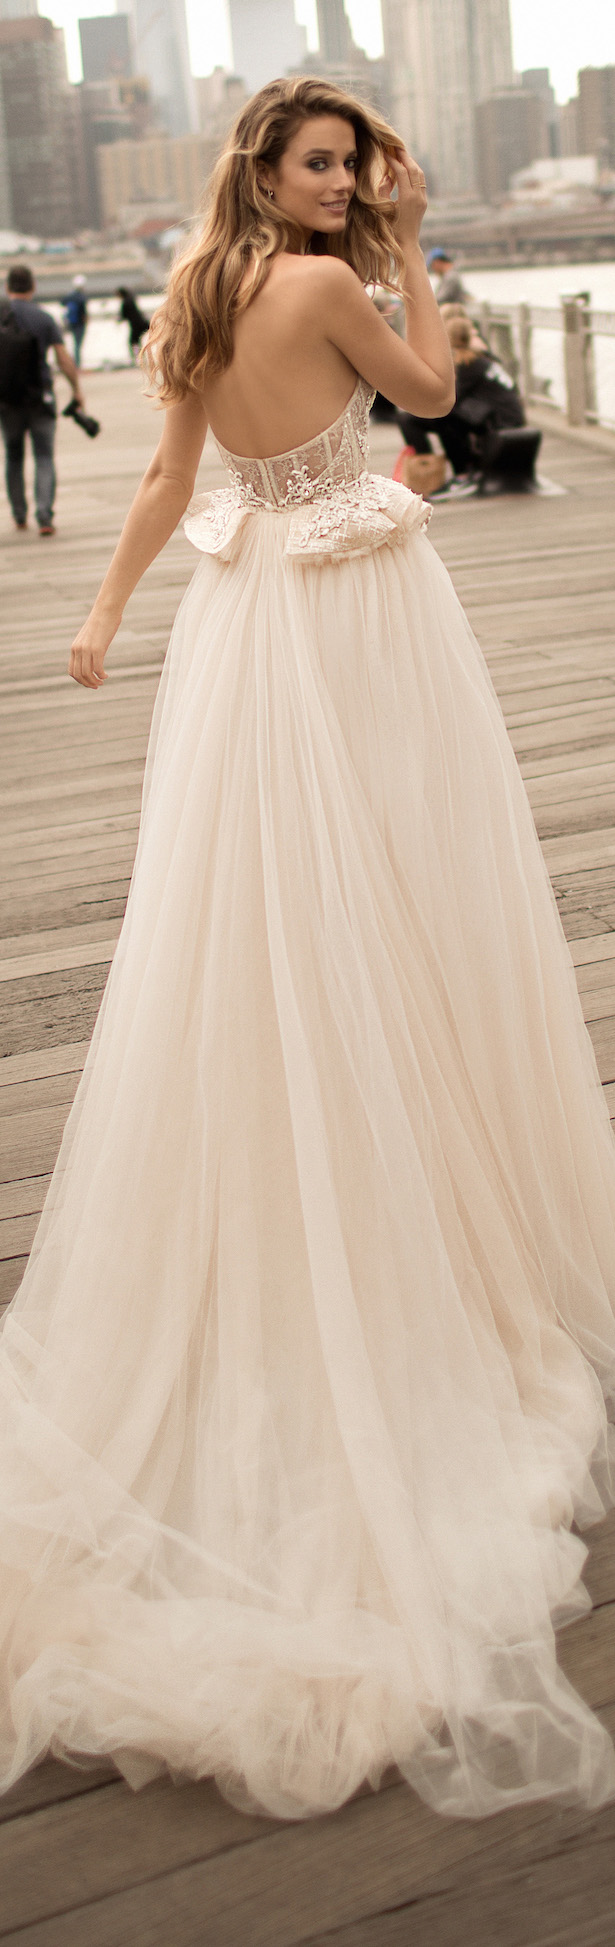 Berta Wedding Dress Collection Spring 2018